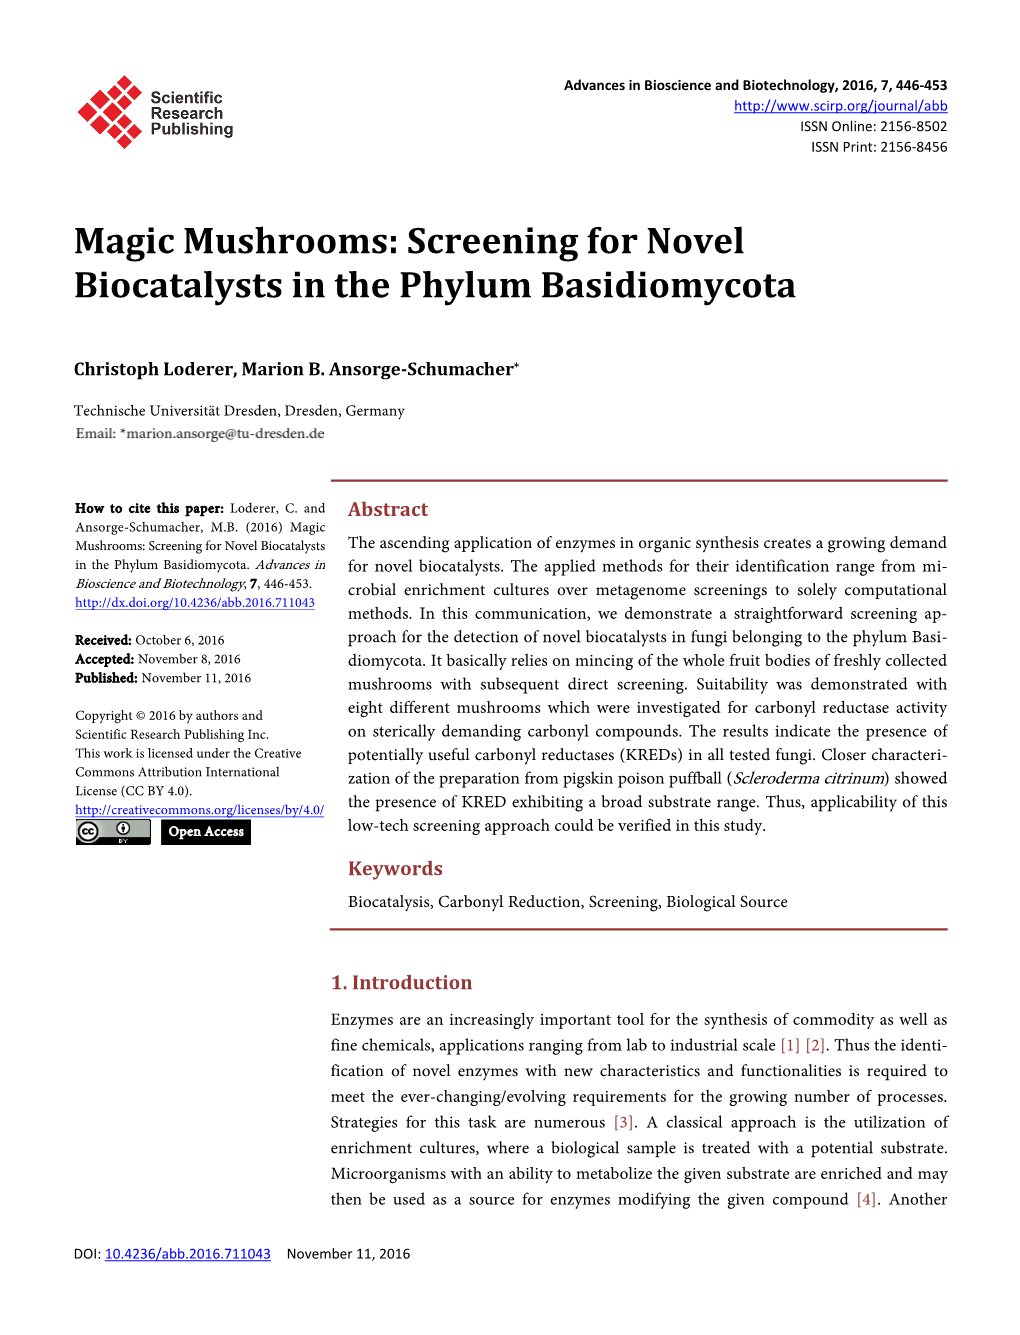 Screening for Novel Biocatalysts in the Phylum Basidiomycota